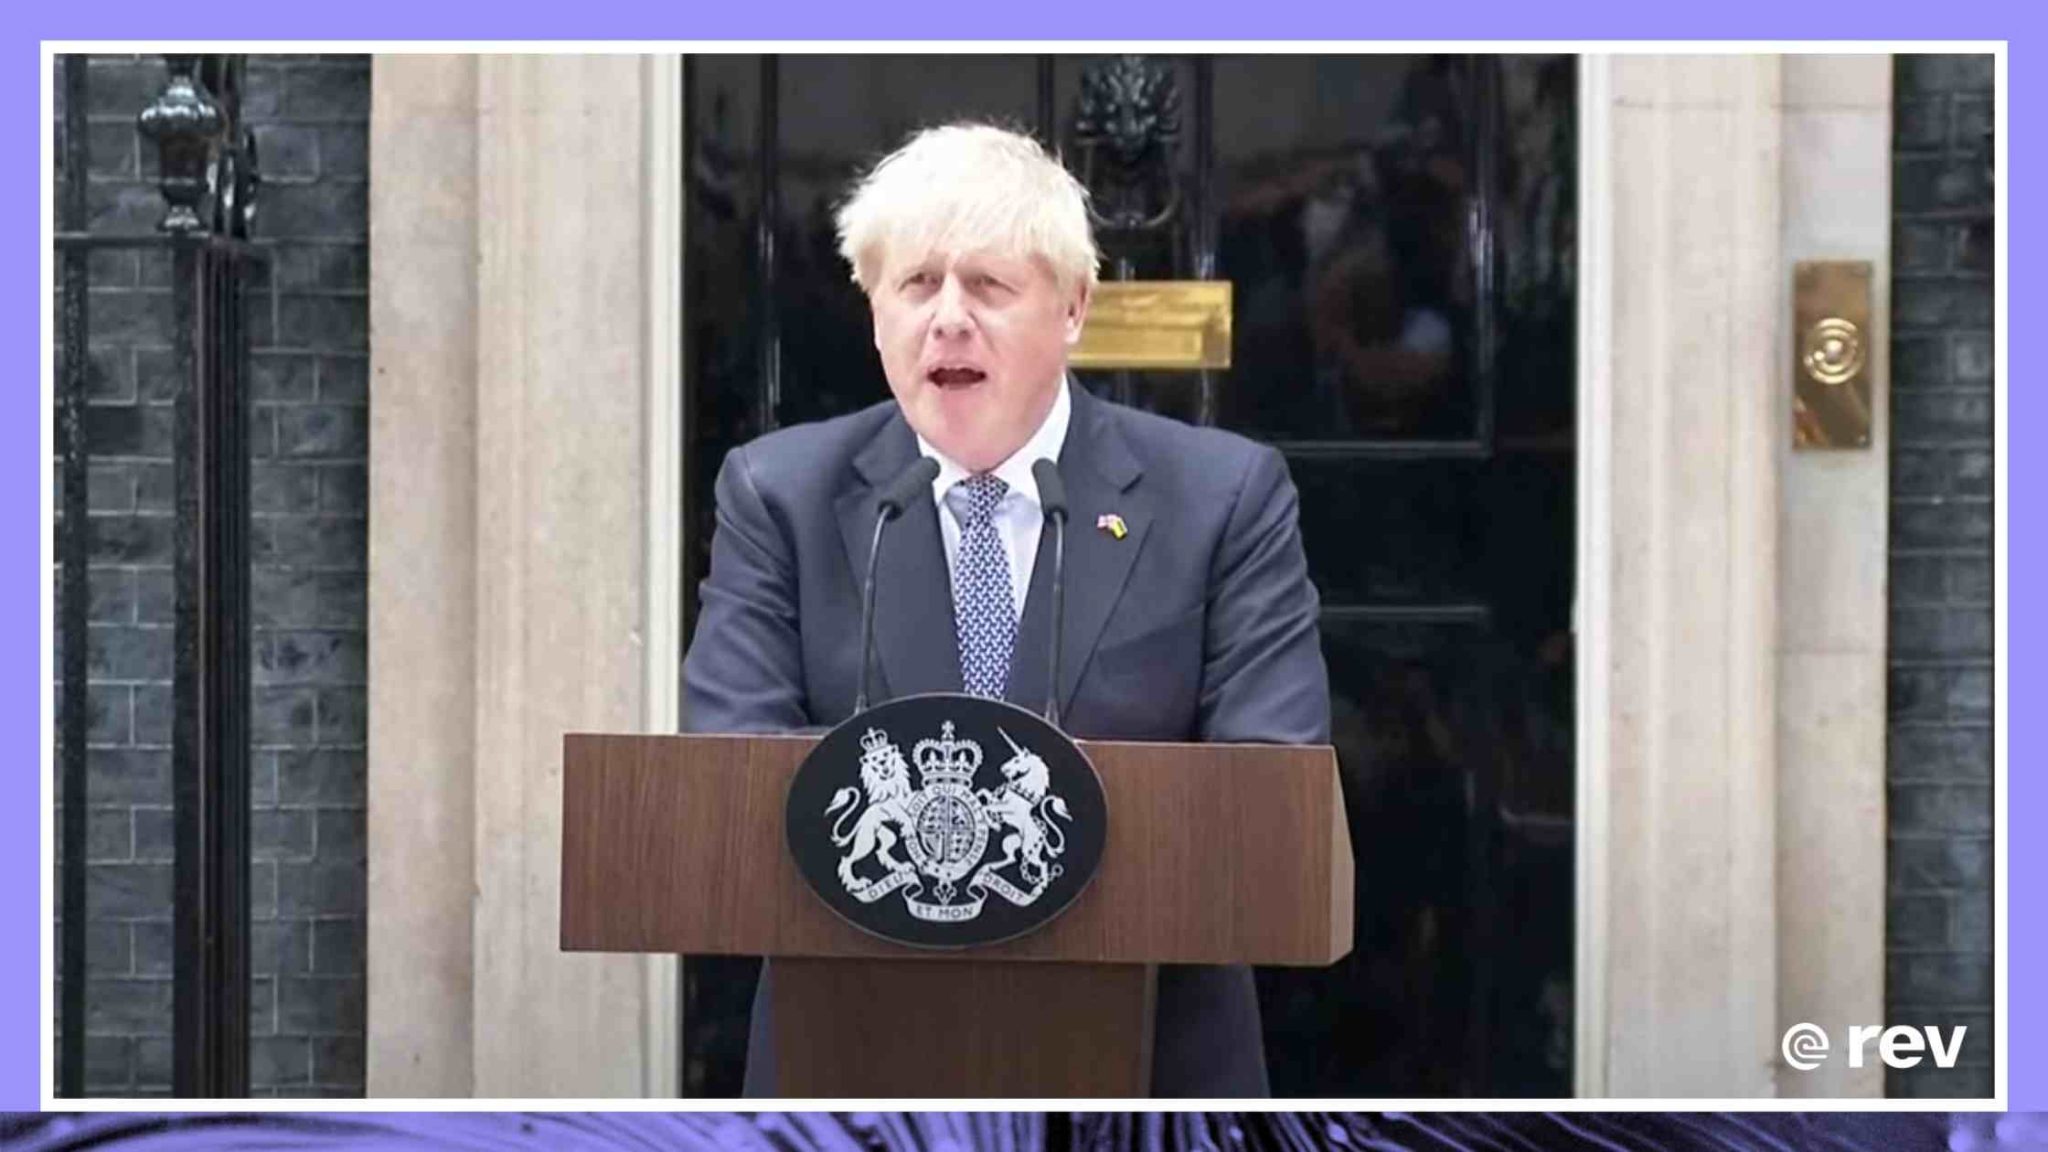 Boris Johnson resigns as British prime minister 7/07/22 Transcript